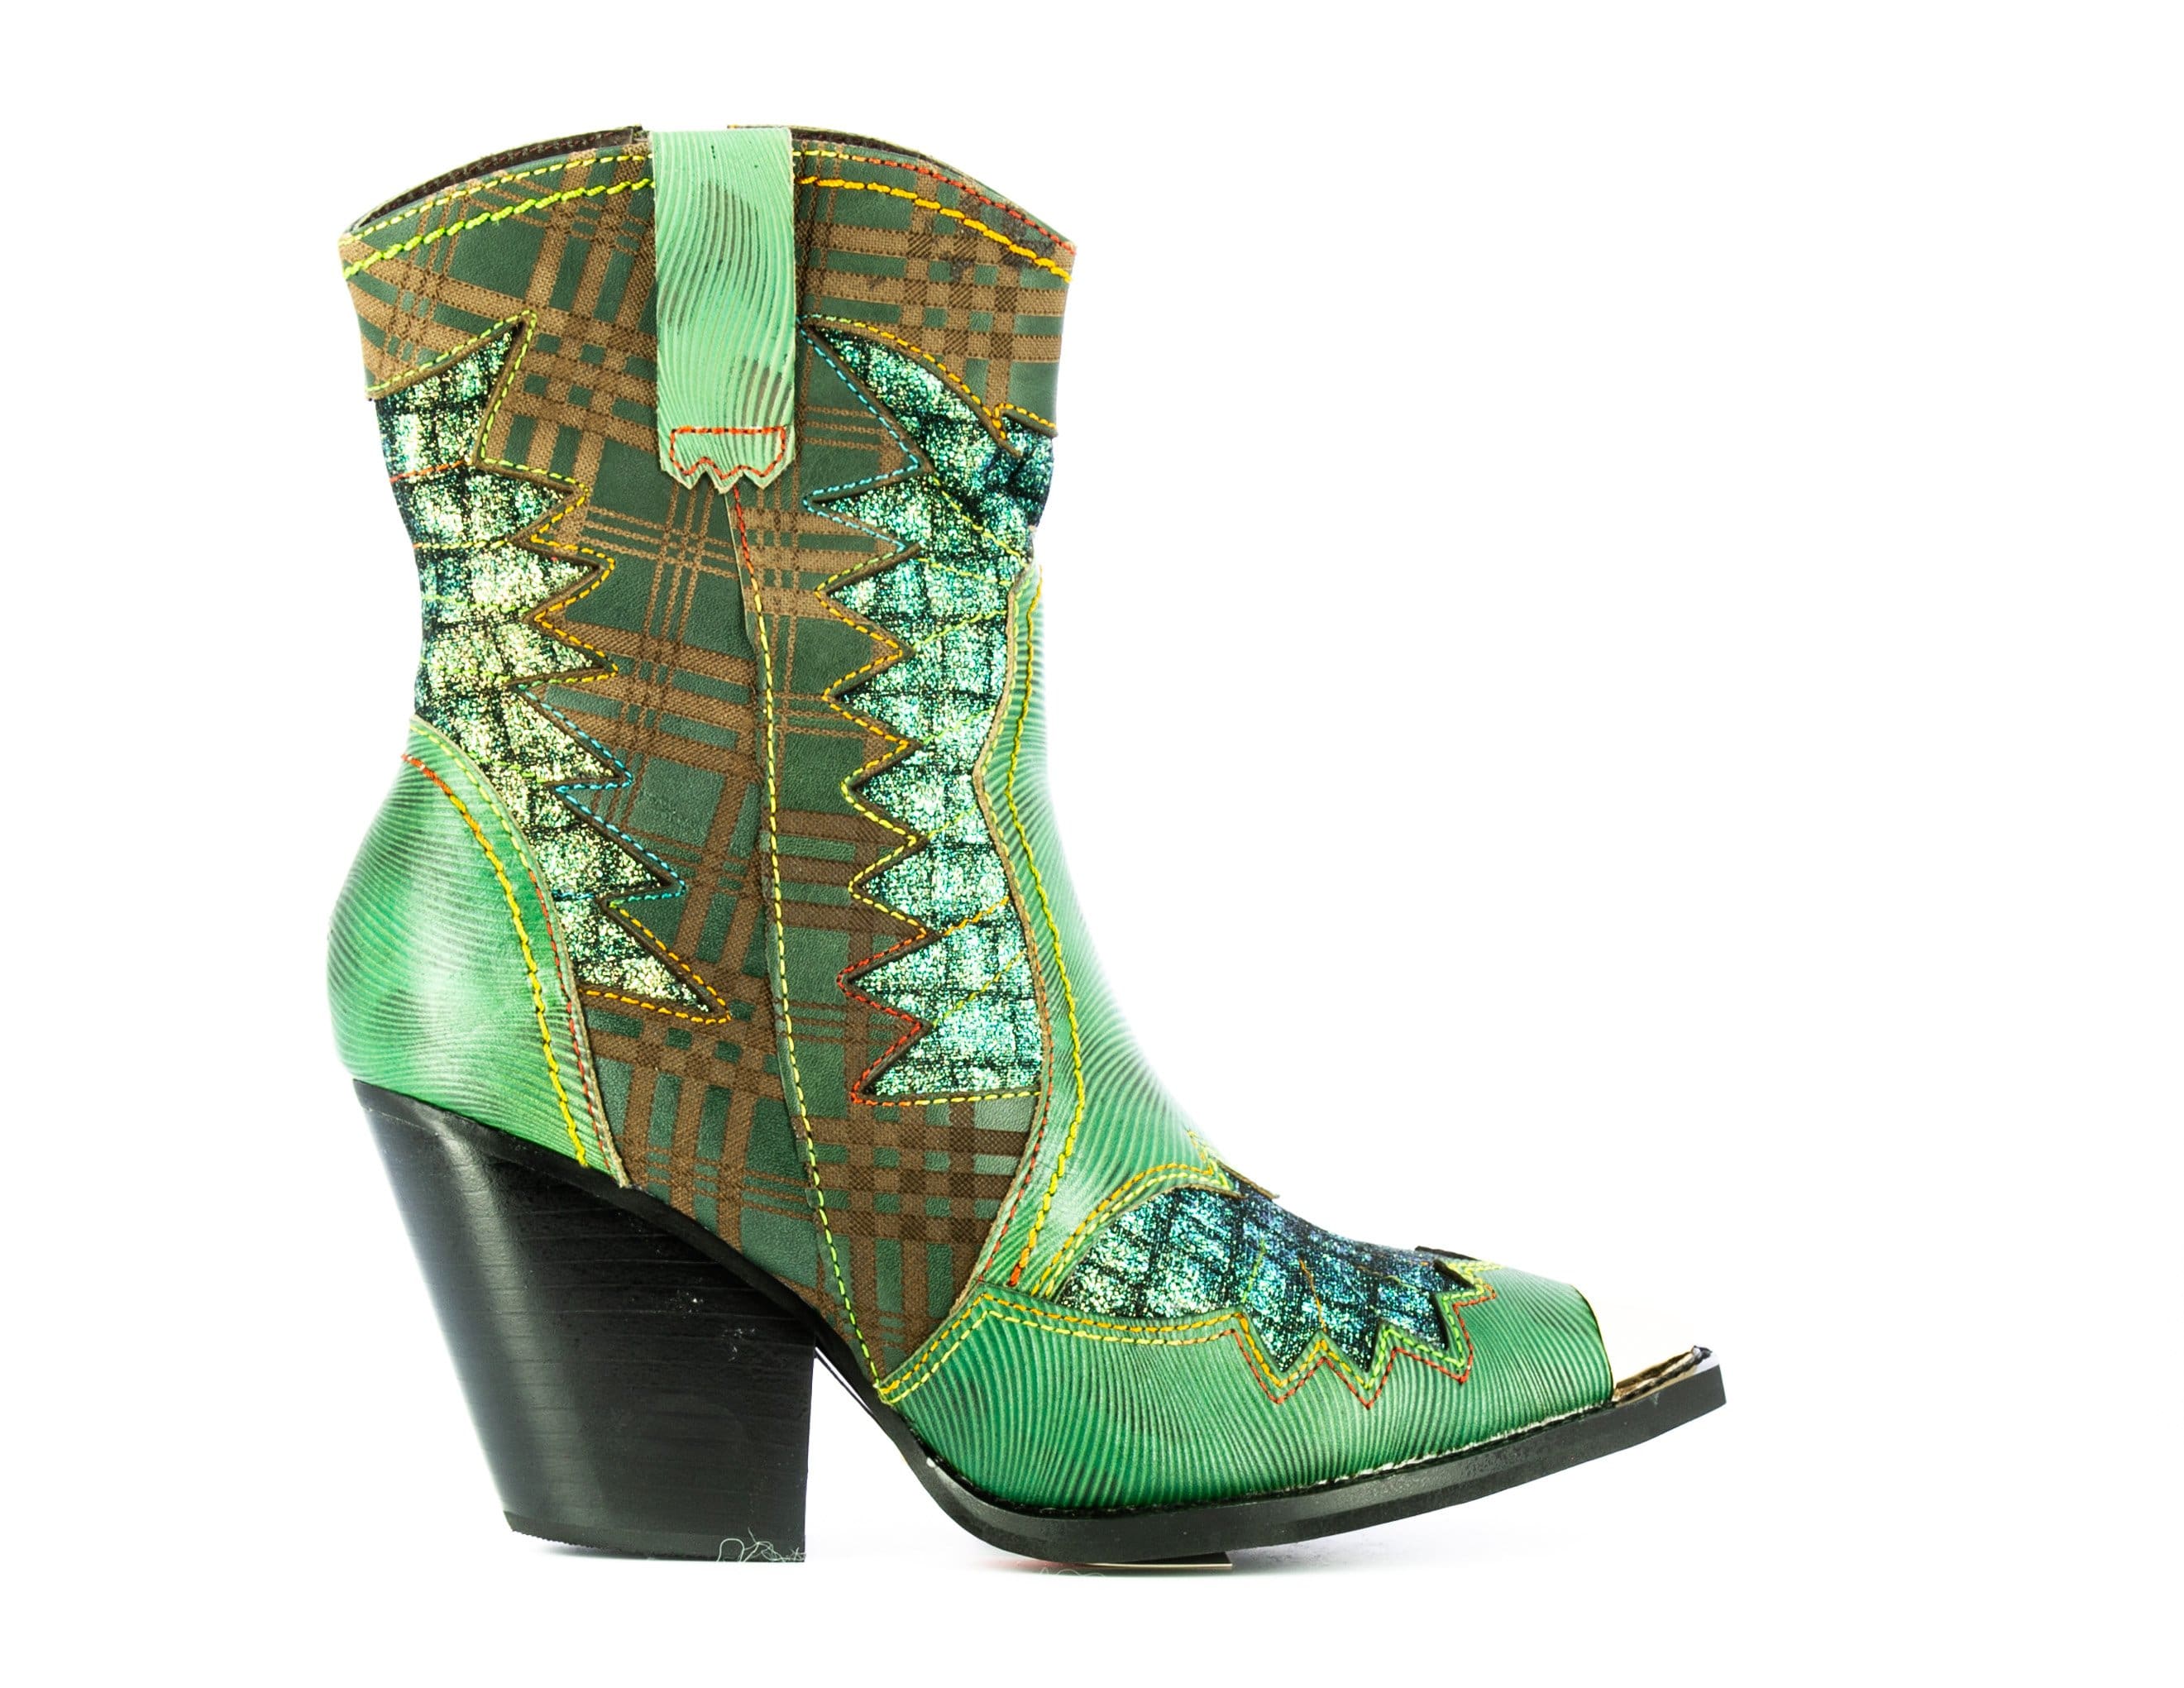 Shoe IACNAO 06 - 35 / Green - Boots